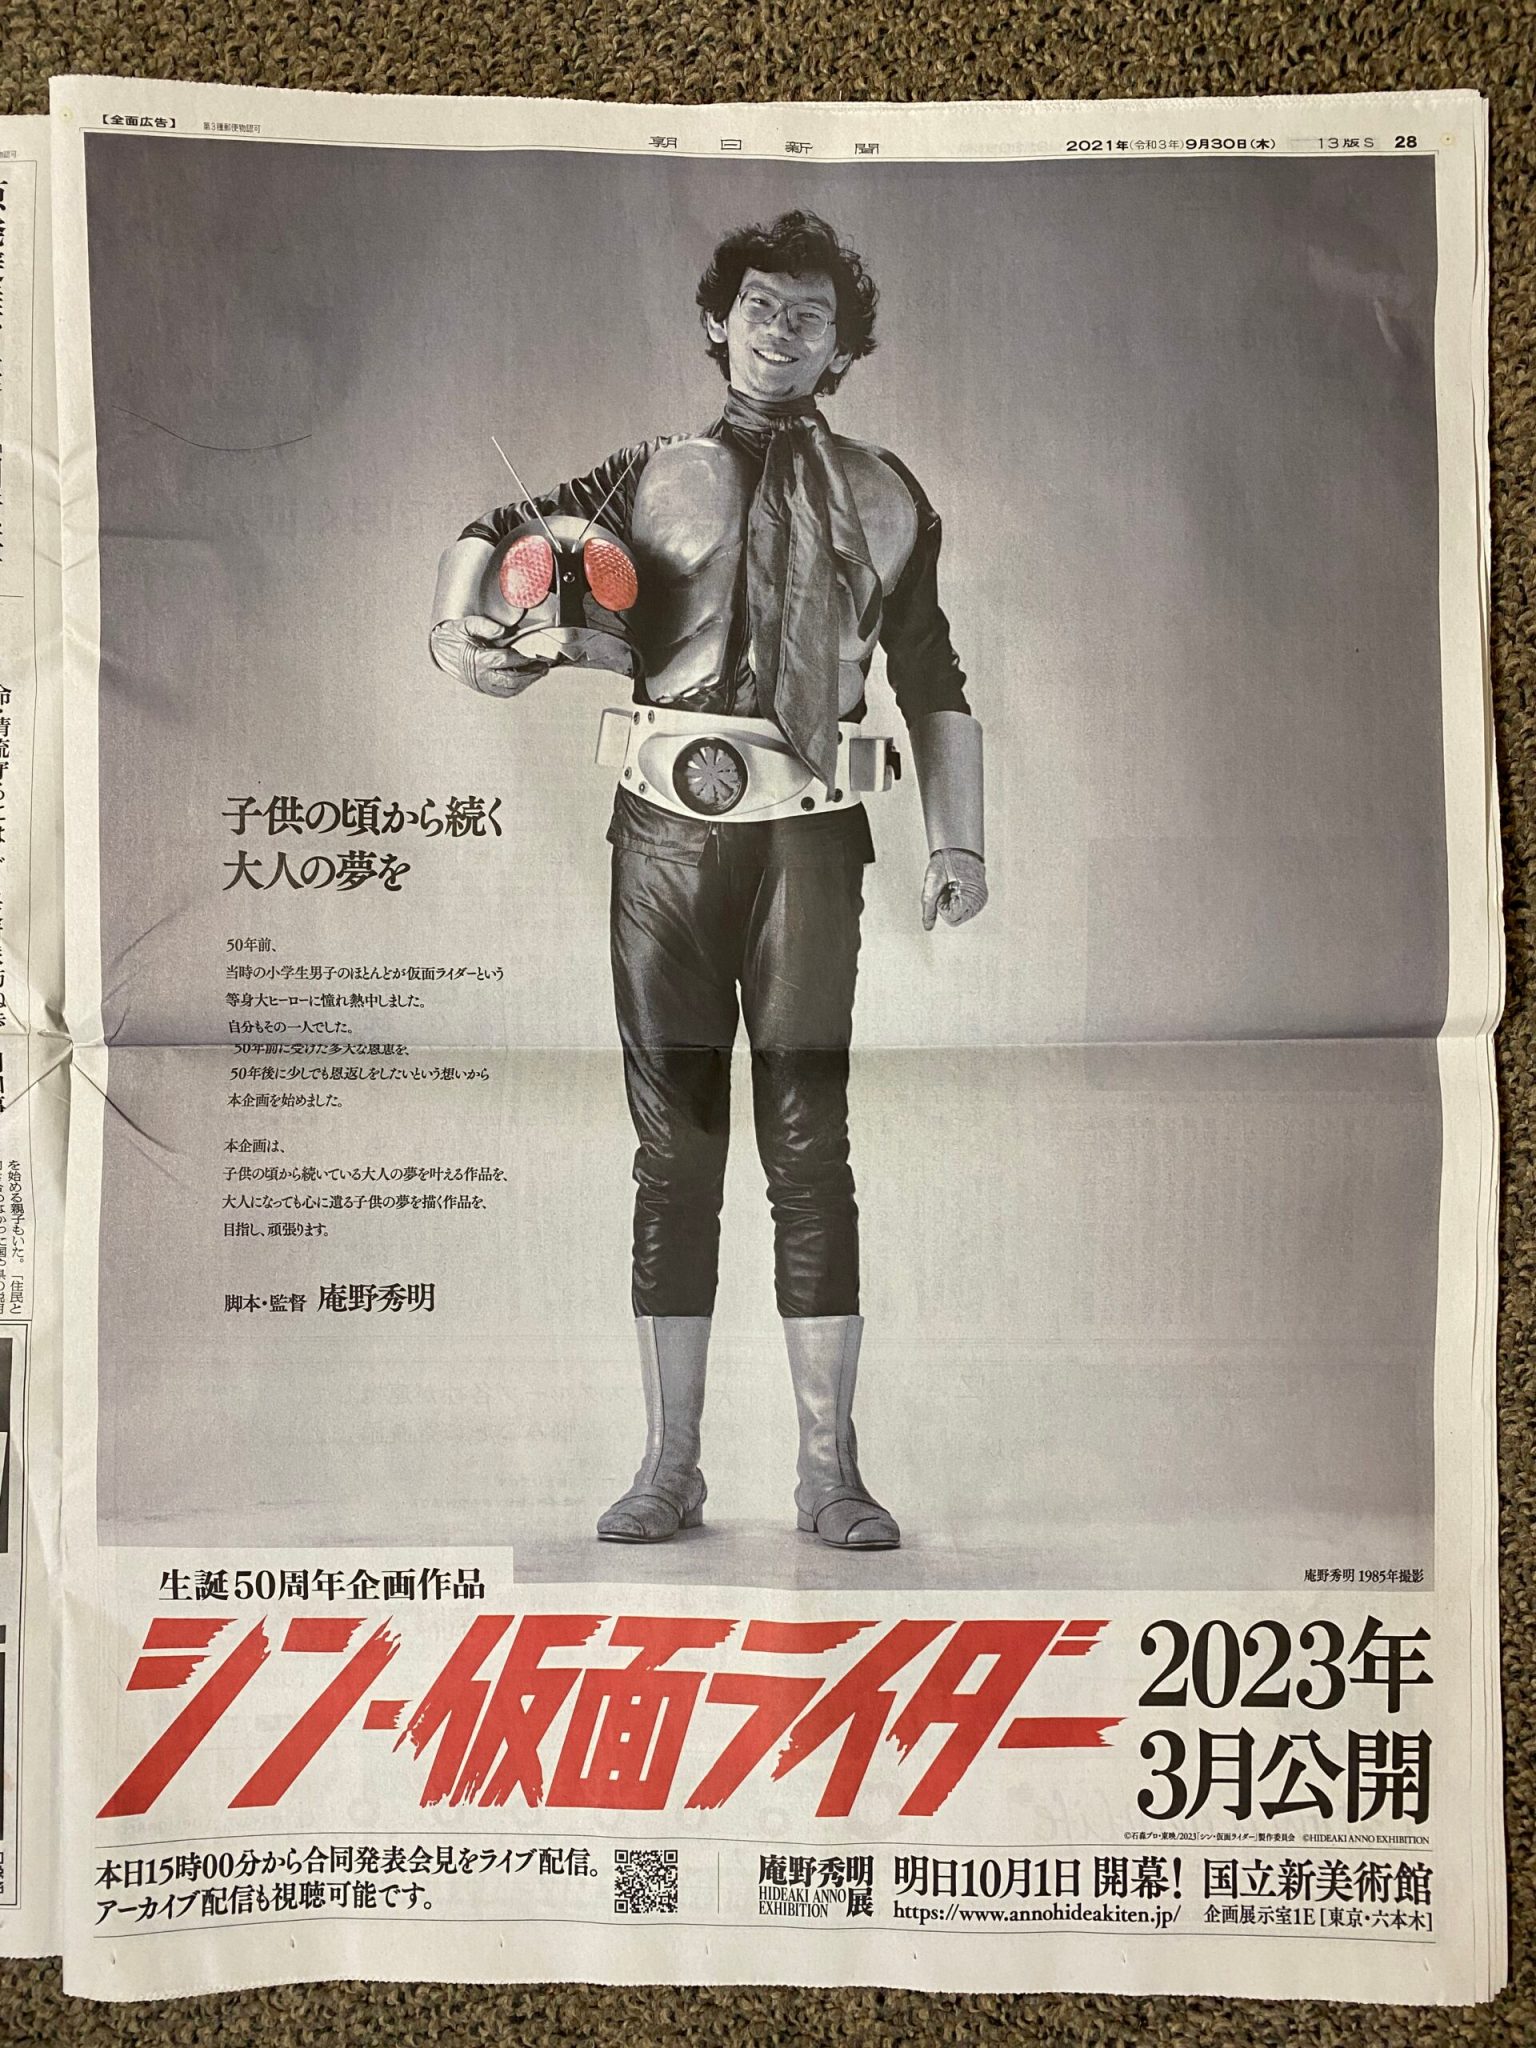 Hideaki Anno como Kamen Rider